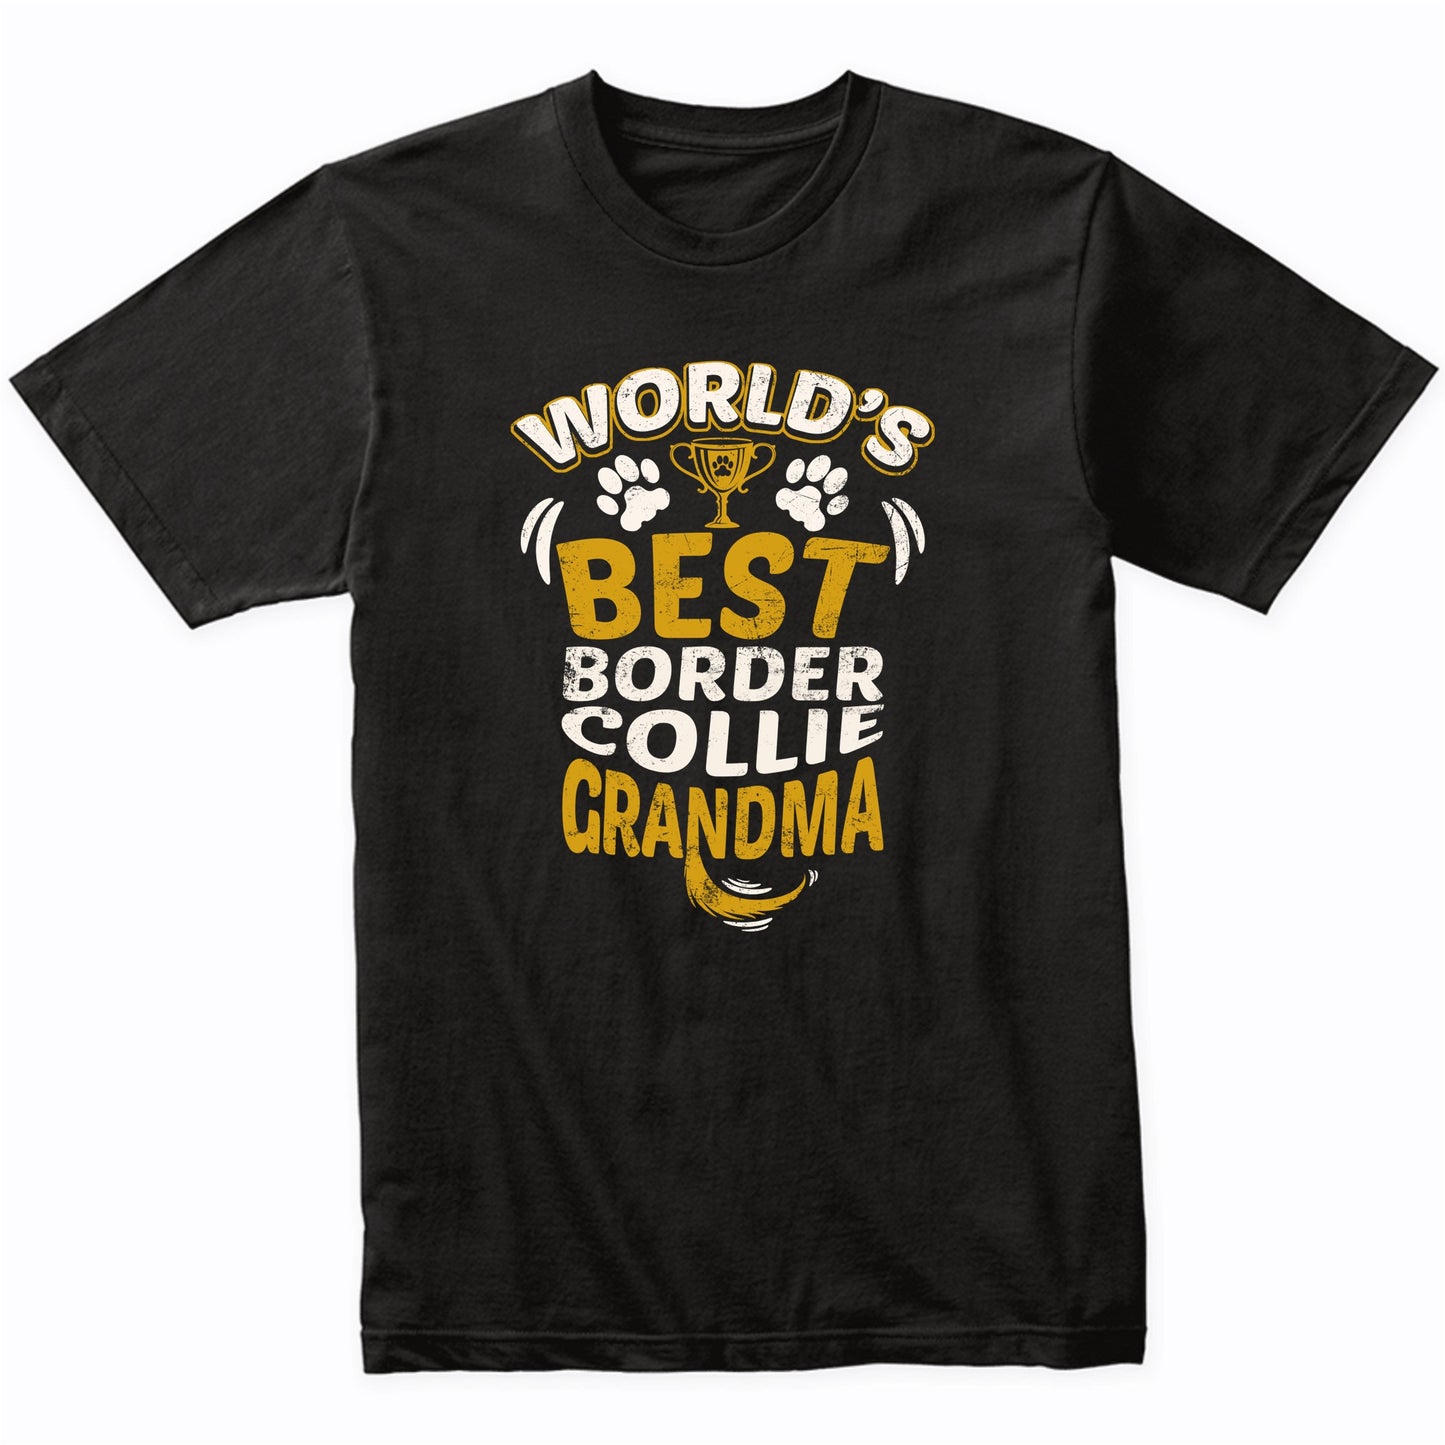 World's Best Border Collie Grandma Graphic T-Shirt